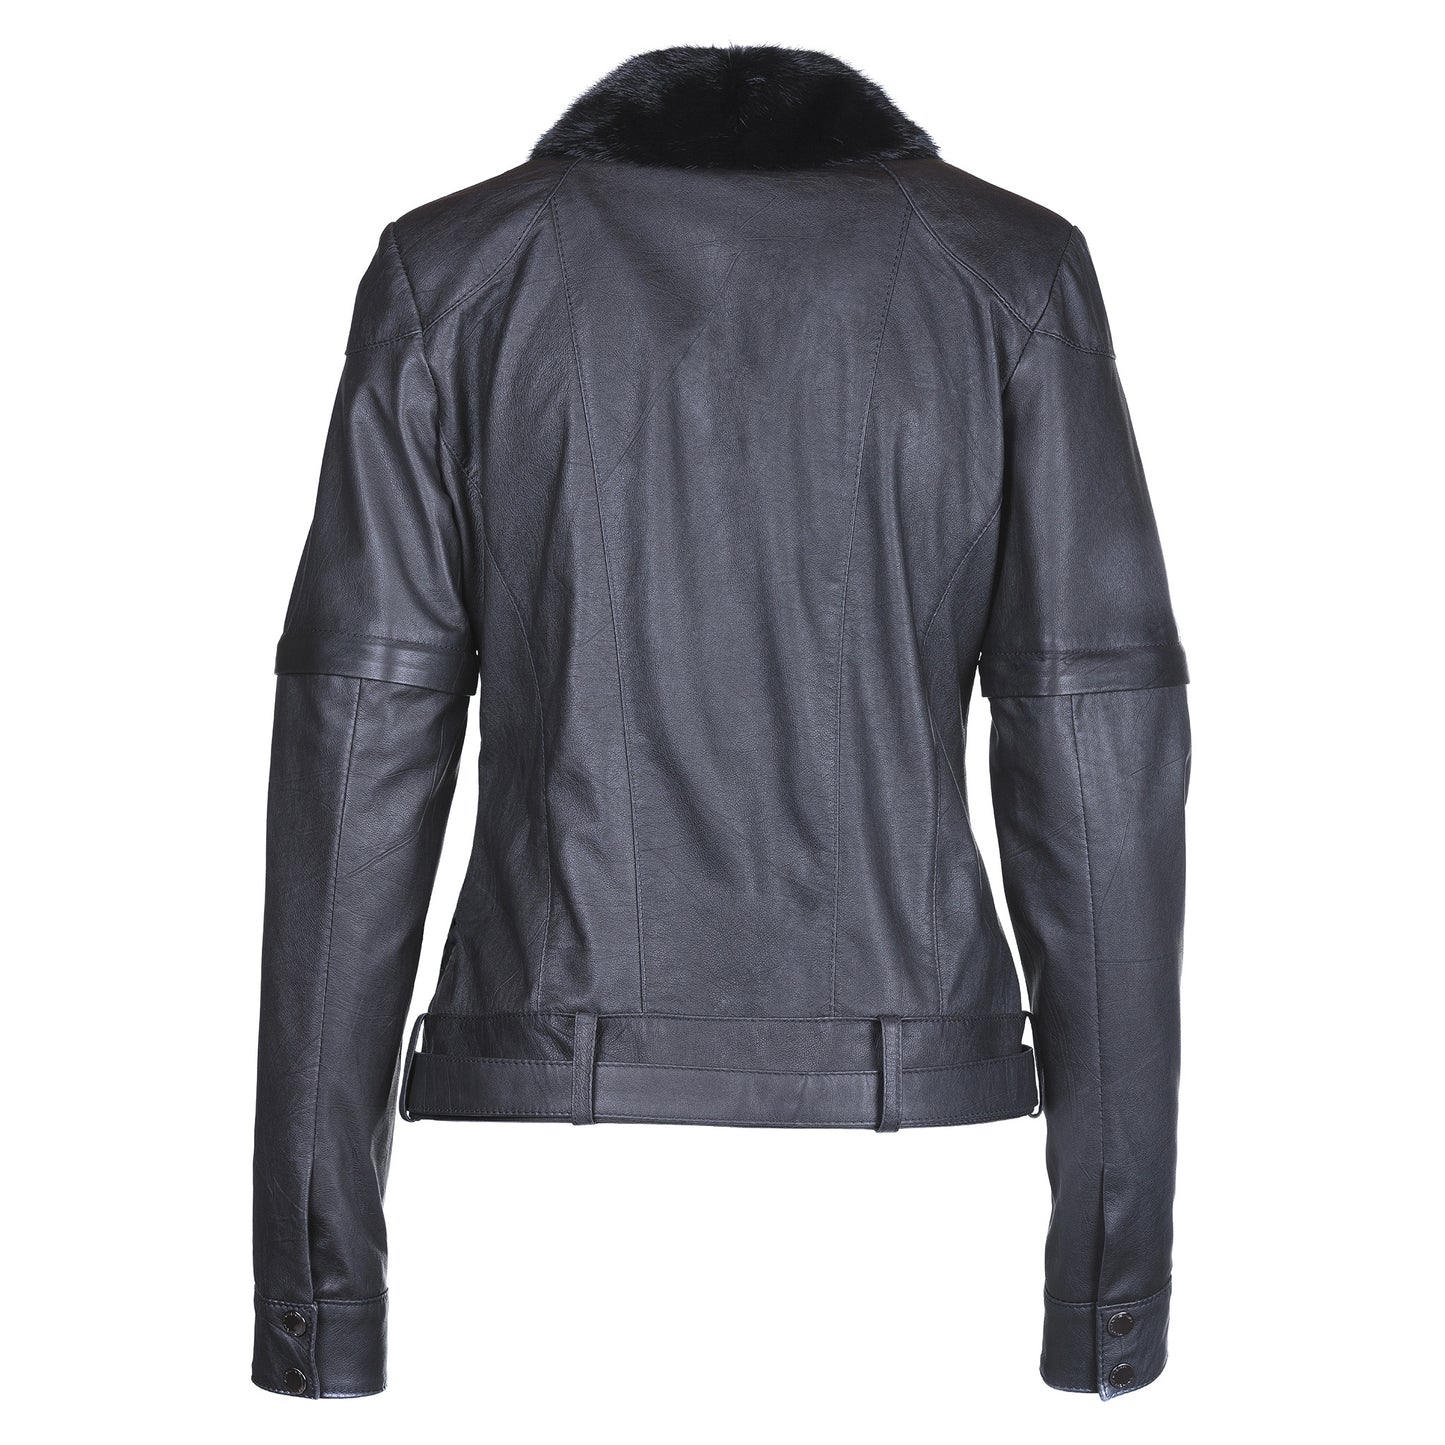 Mink Removable Sleeves Reindeer Leather Jacket- Limited Edition